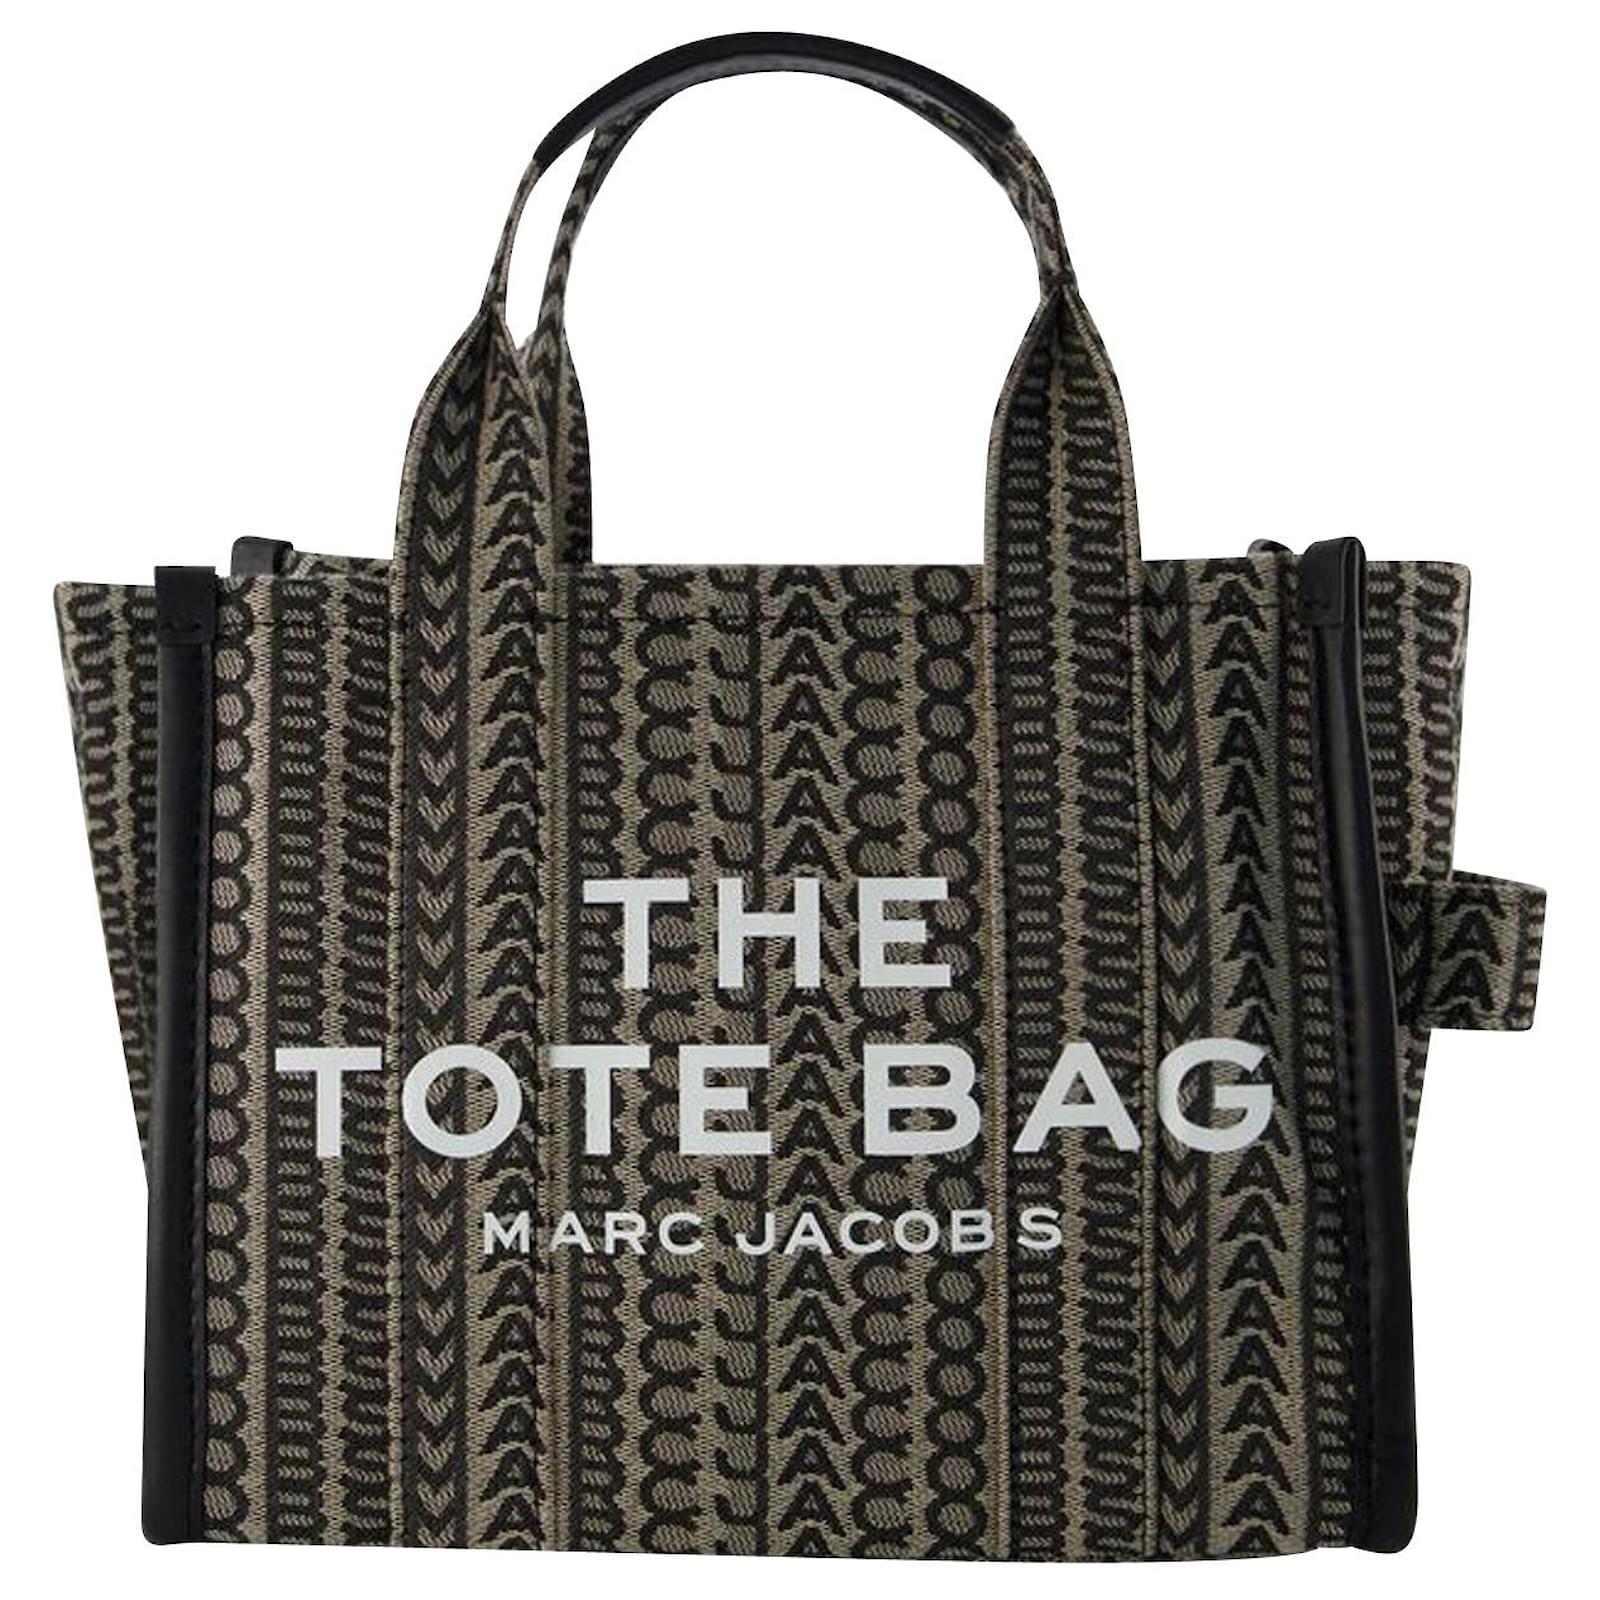 The Monogram Metallic Mini Tote Bag, Marc Jacobs